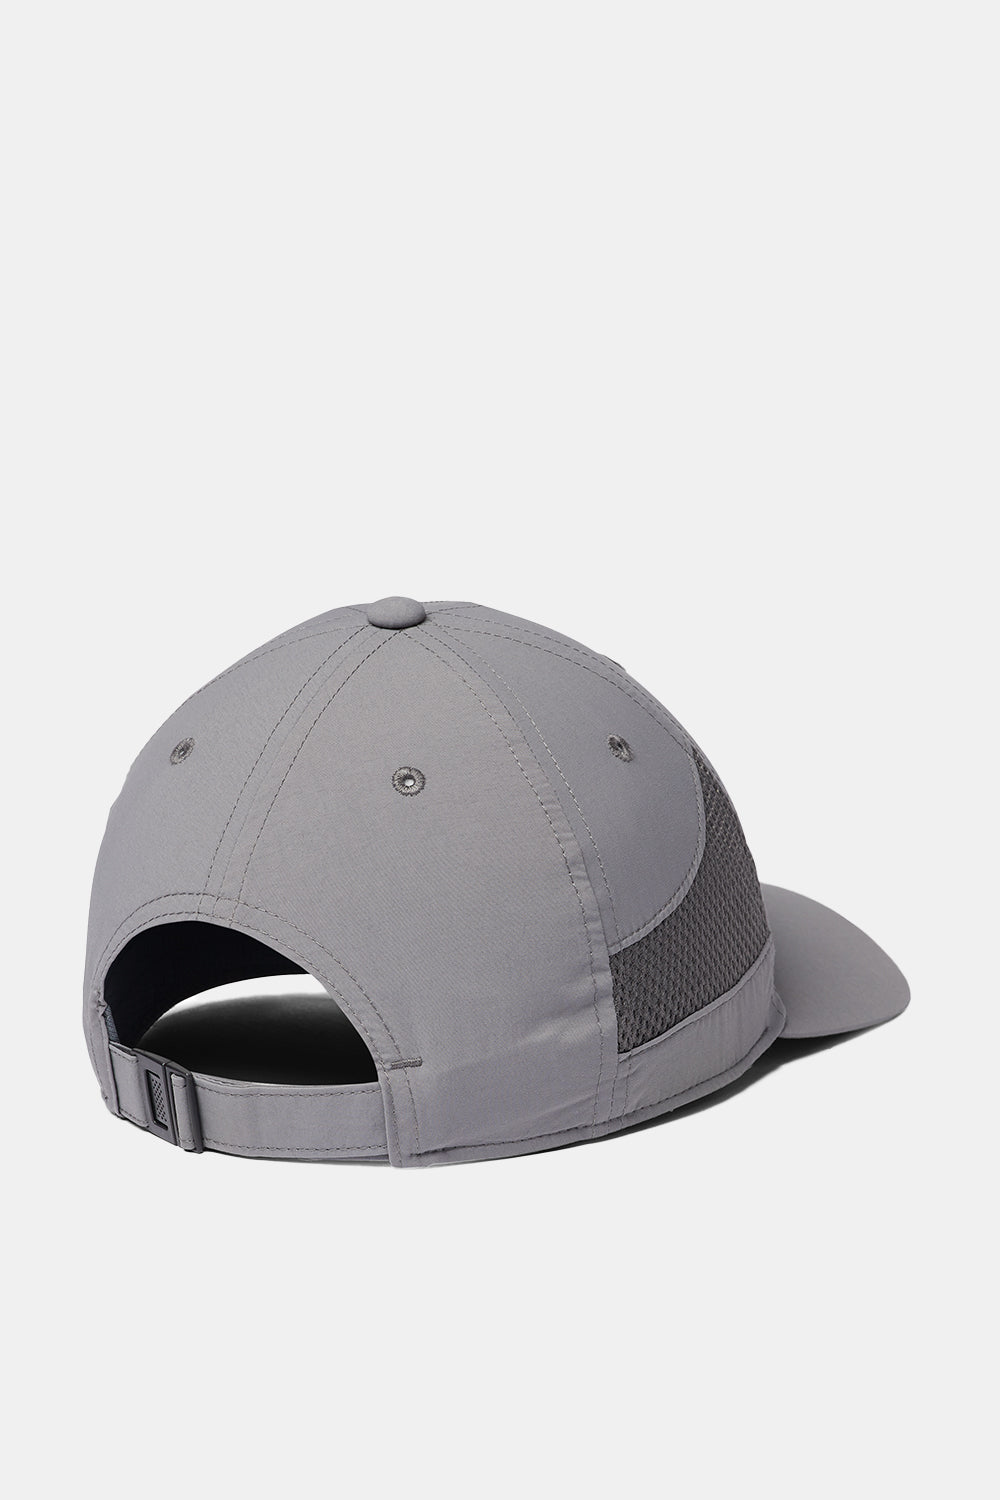 Columbia Tech ShadeTM Hat (City Grey)